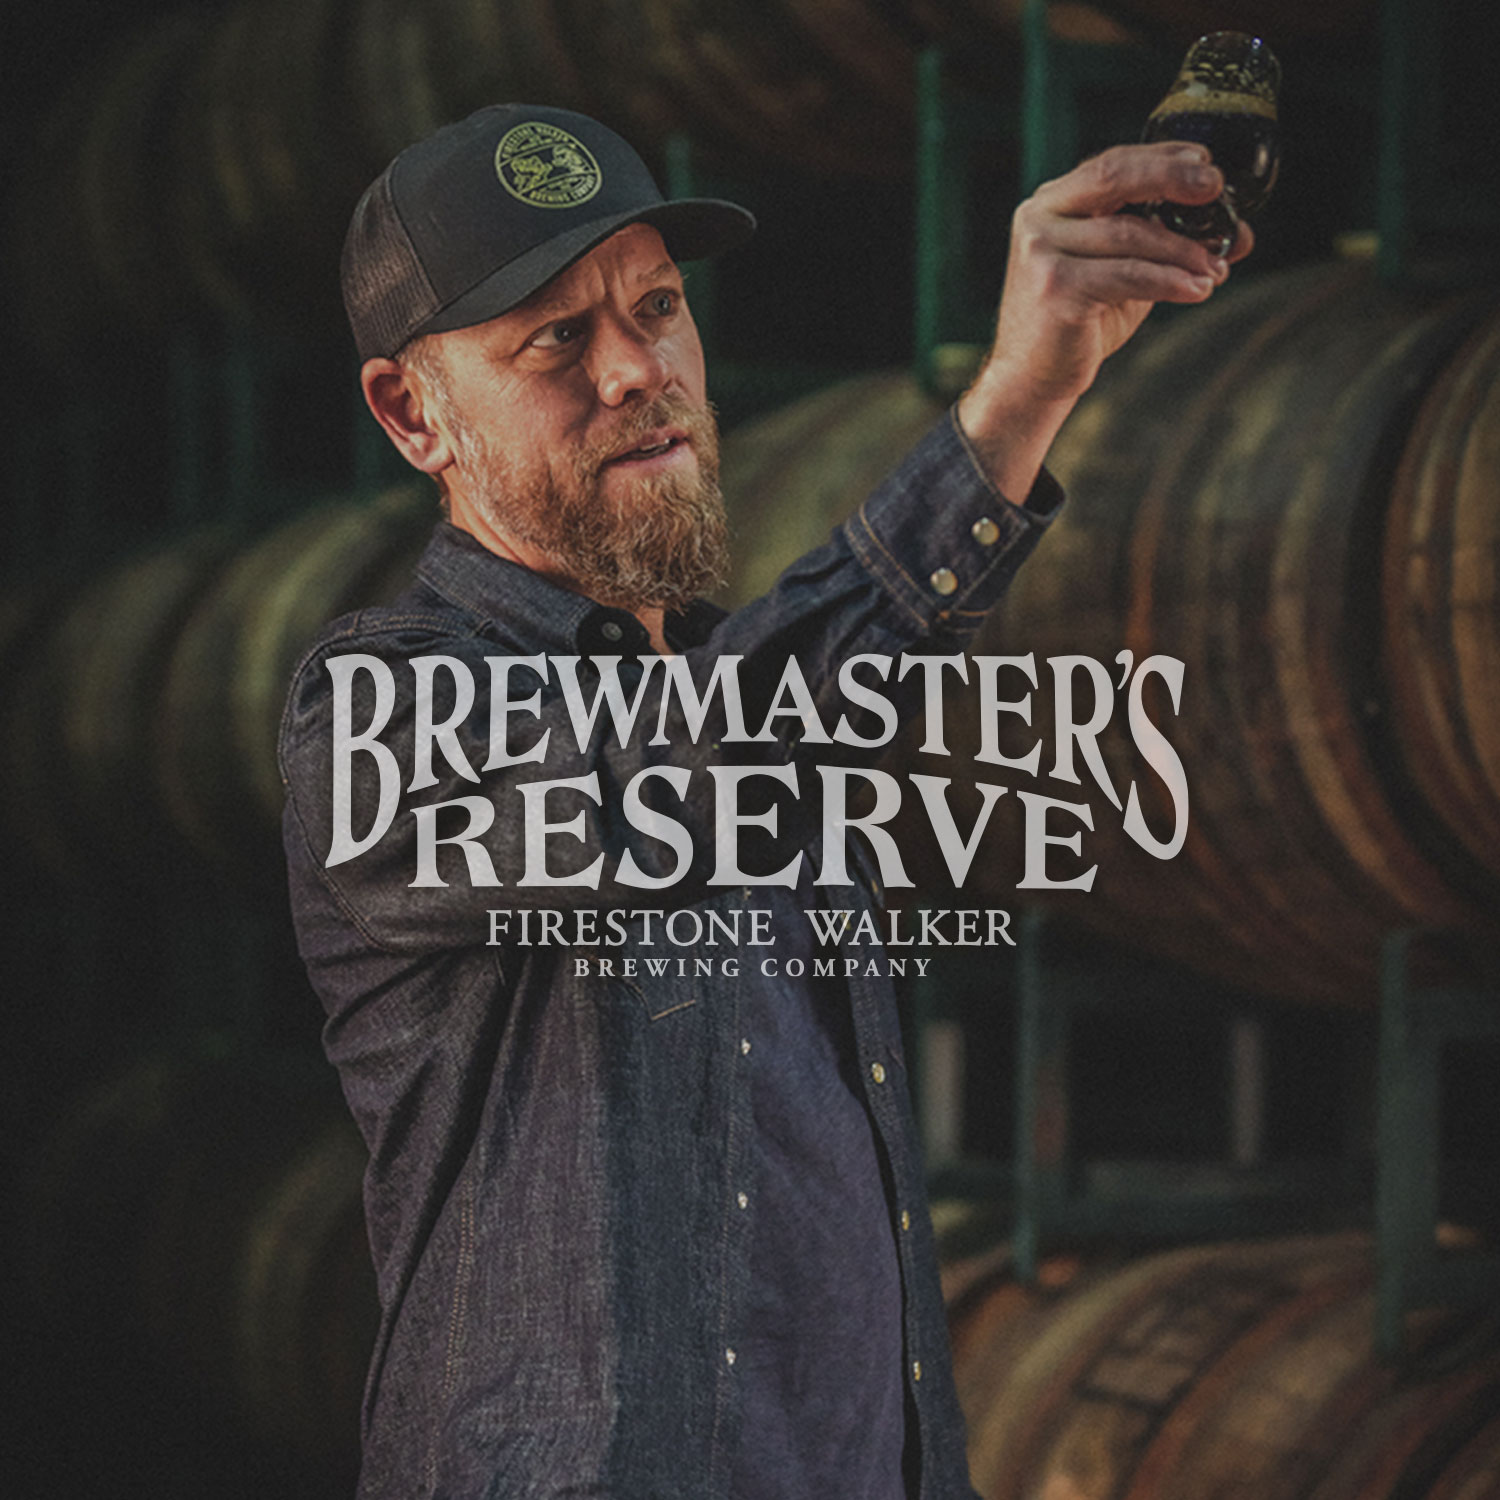 Firestone Walker Brewmaster's Reserve advertisement